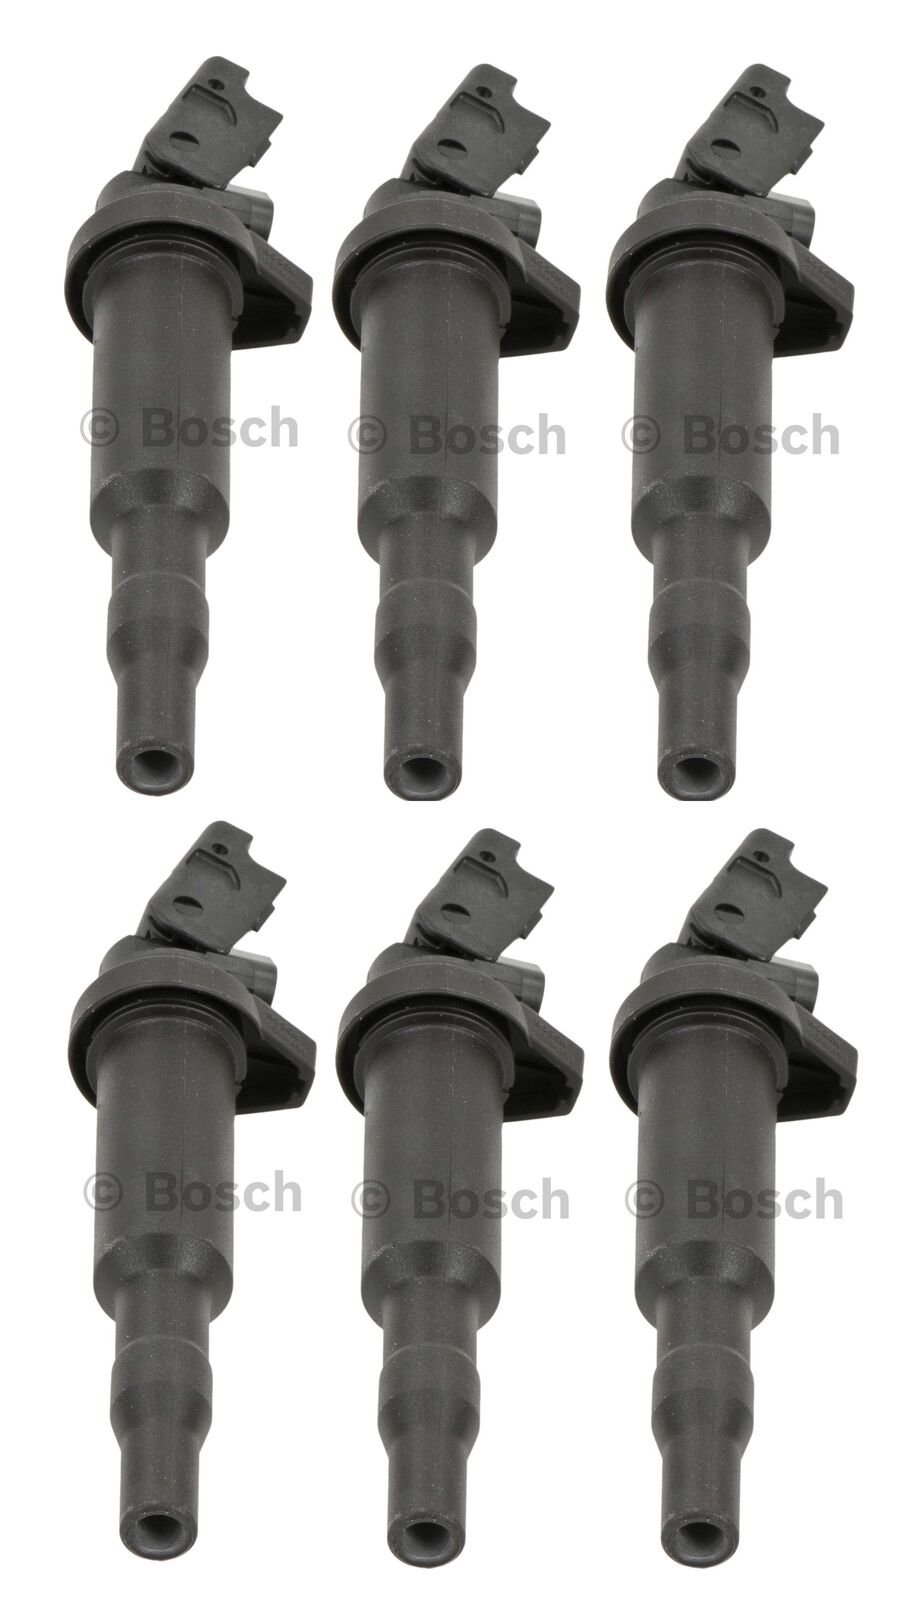 Bosch Set of 6 Ignition Coil with Spark Plug Connectors For BMW F01 E46 E60 E82